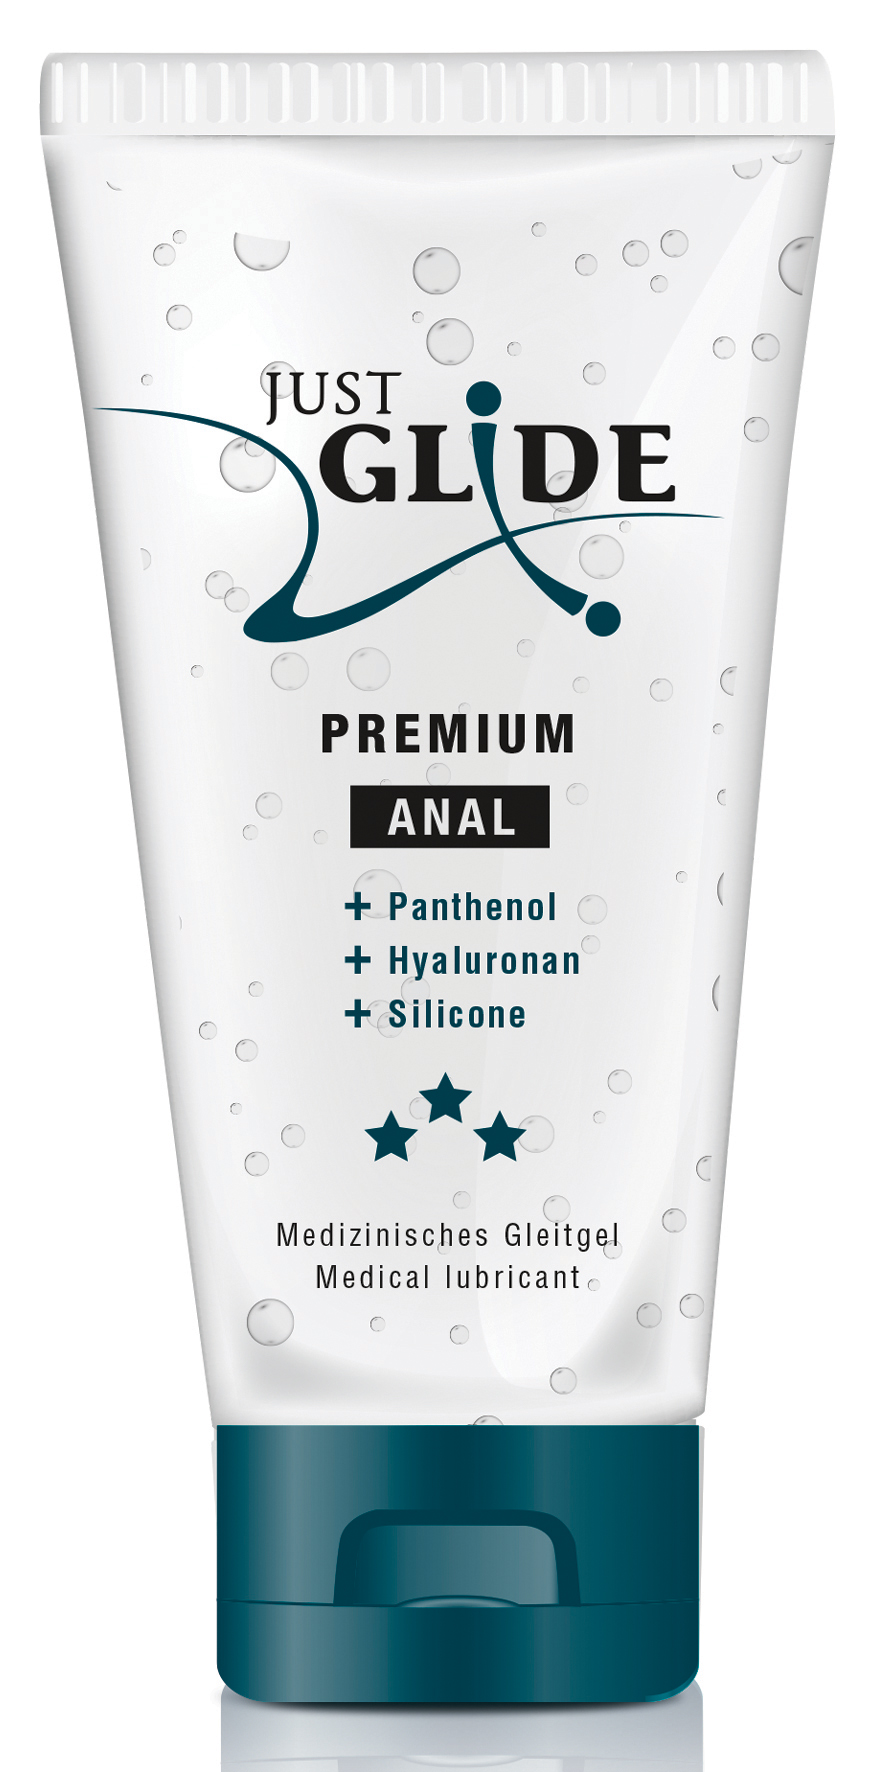 Just Glide Premium Anal 200ml | 200ml | 300000091050